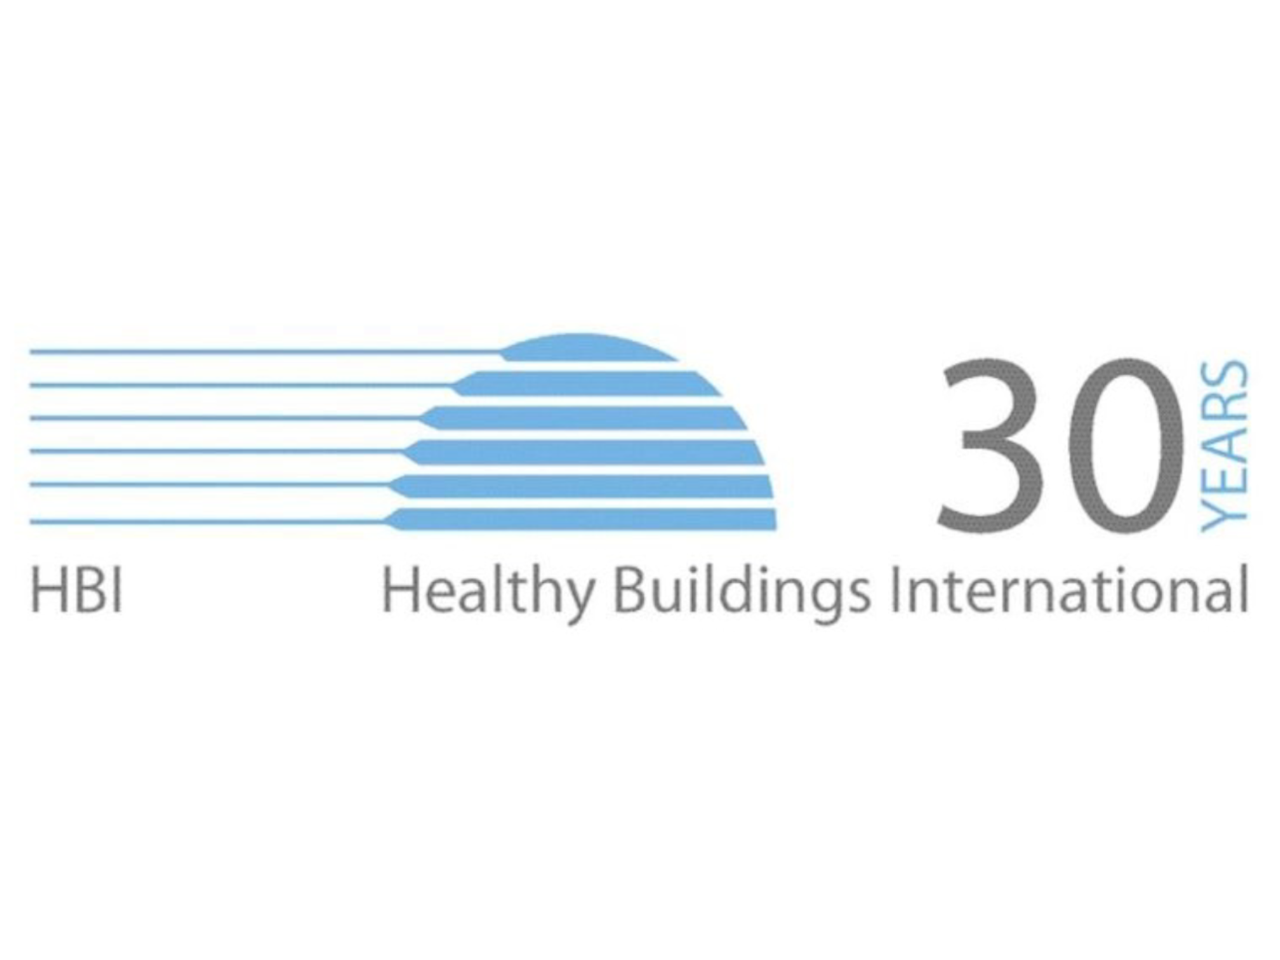 HBI corporate event scalextric hire blog logo